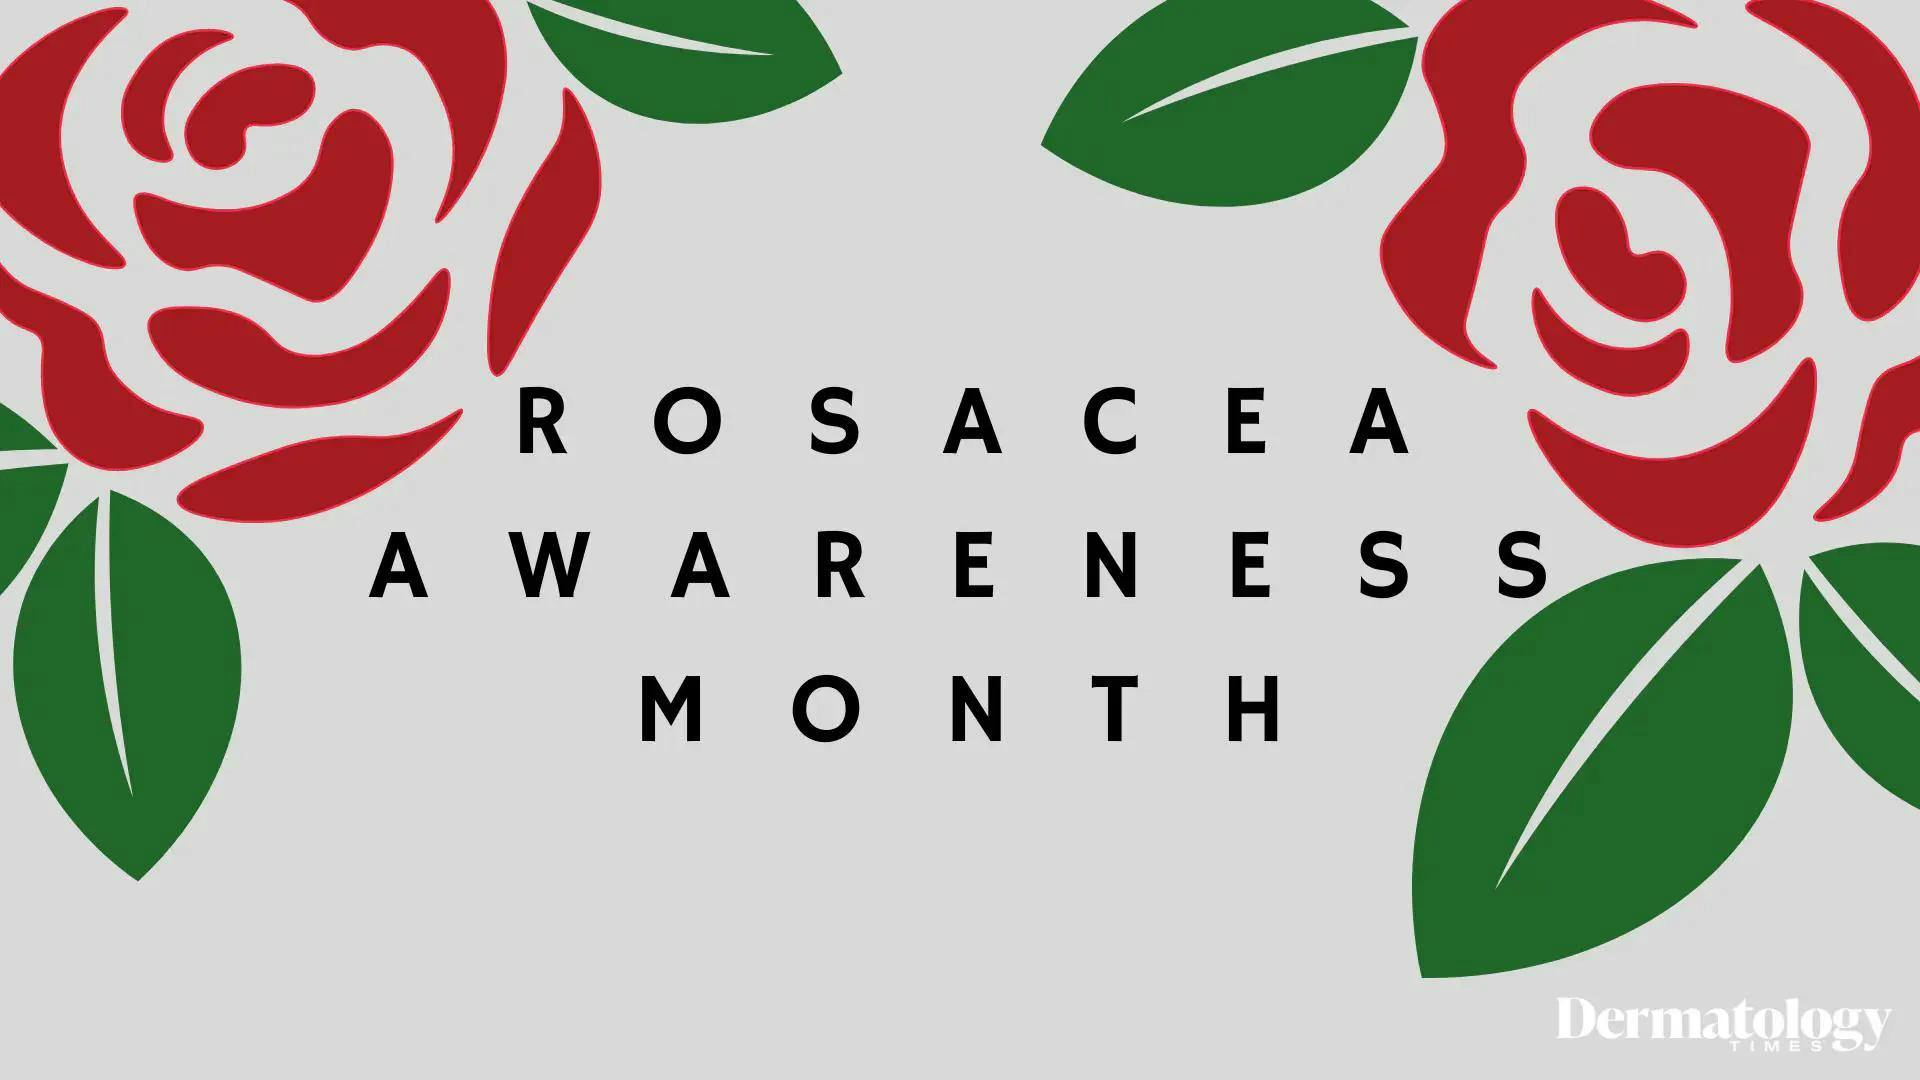 Rosacea awareness month logo | Image credit: Dermatology Times